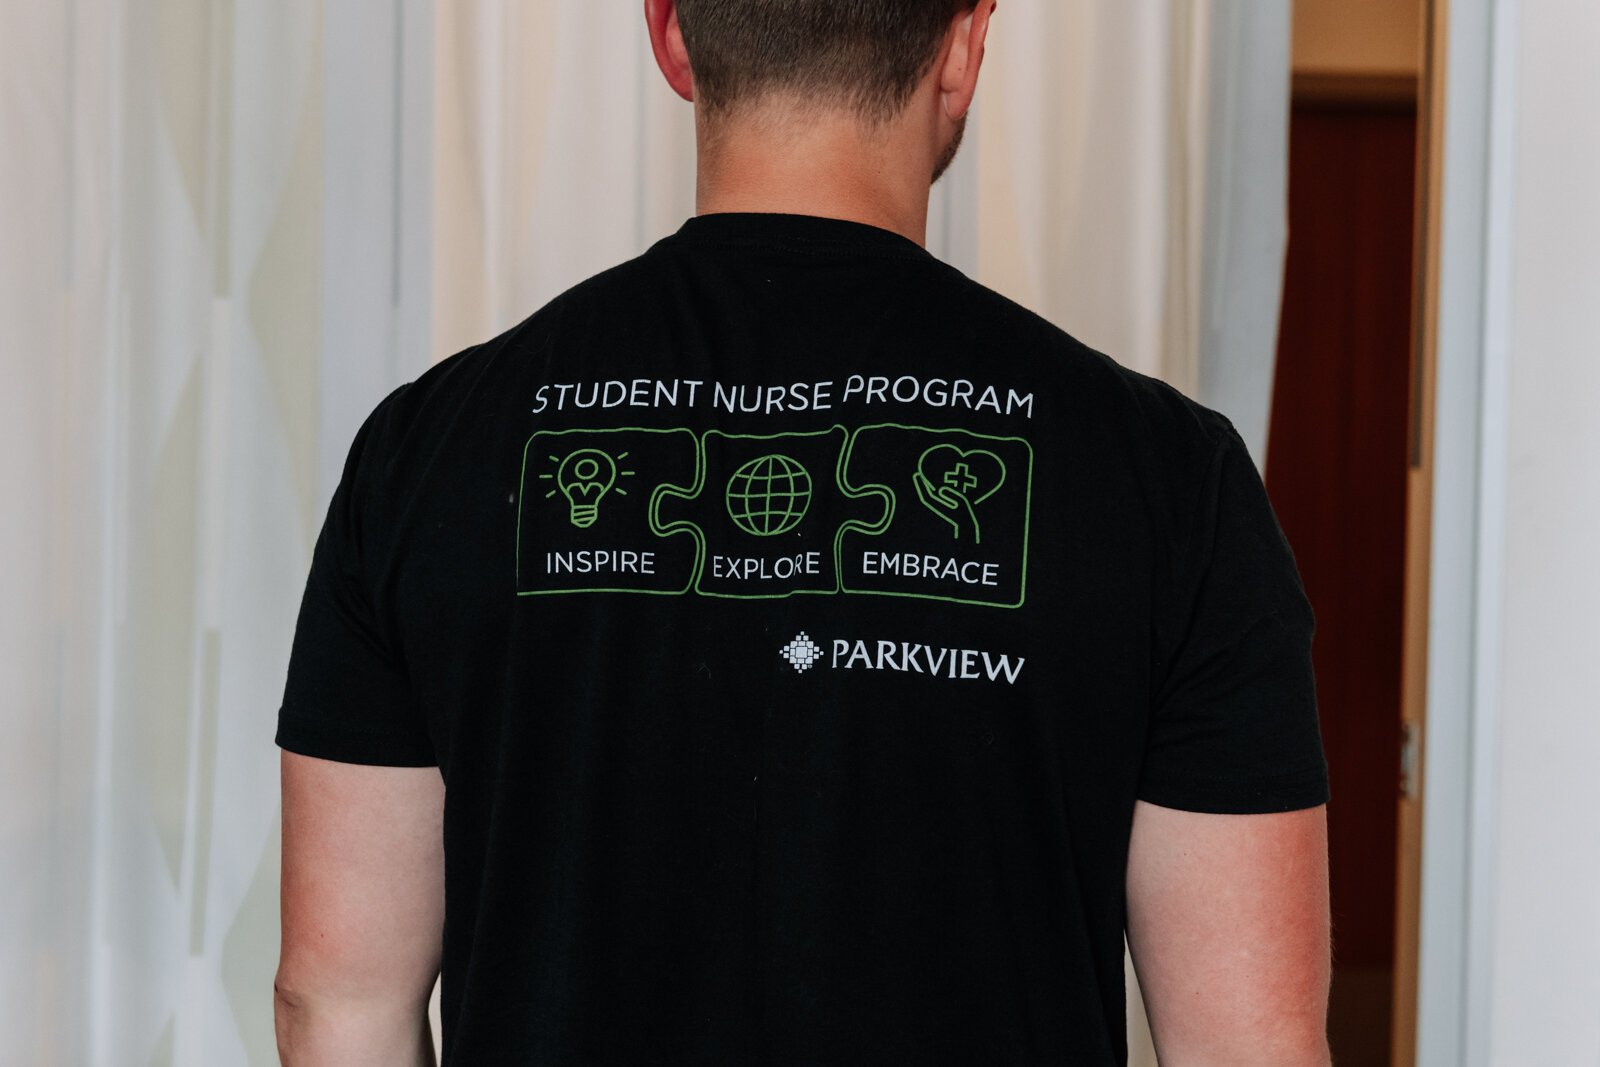 Jayce Colclasure, Student Nurse Apprentice, shows off his shirt at Parkview Regional Medical Center.